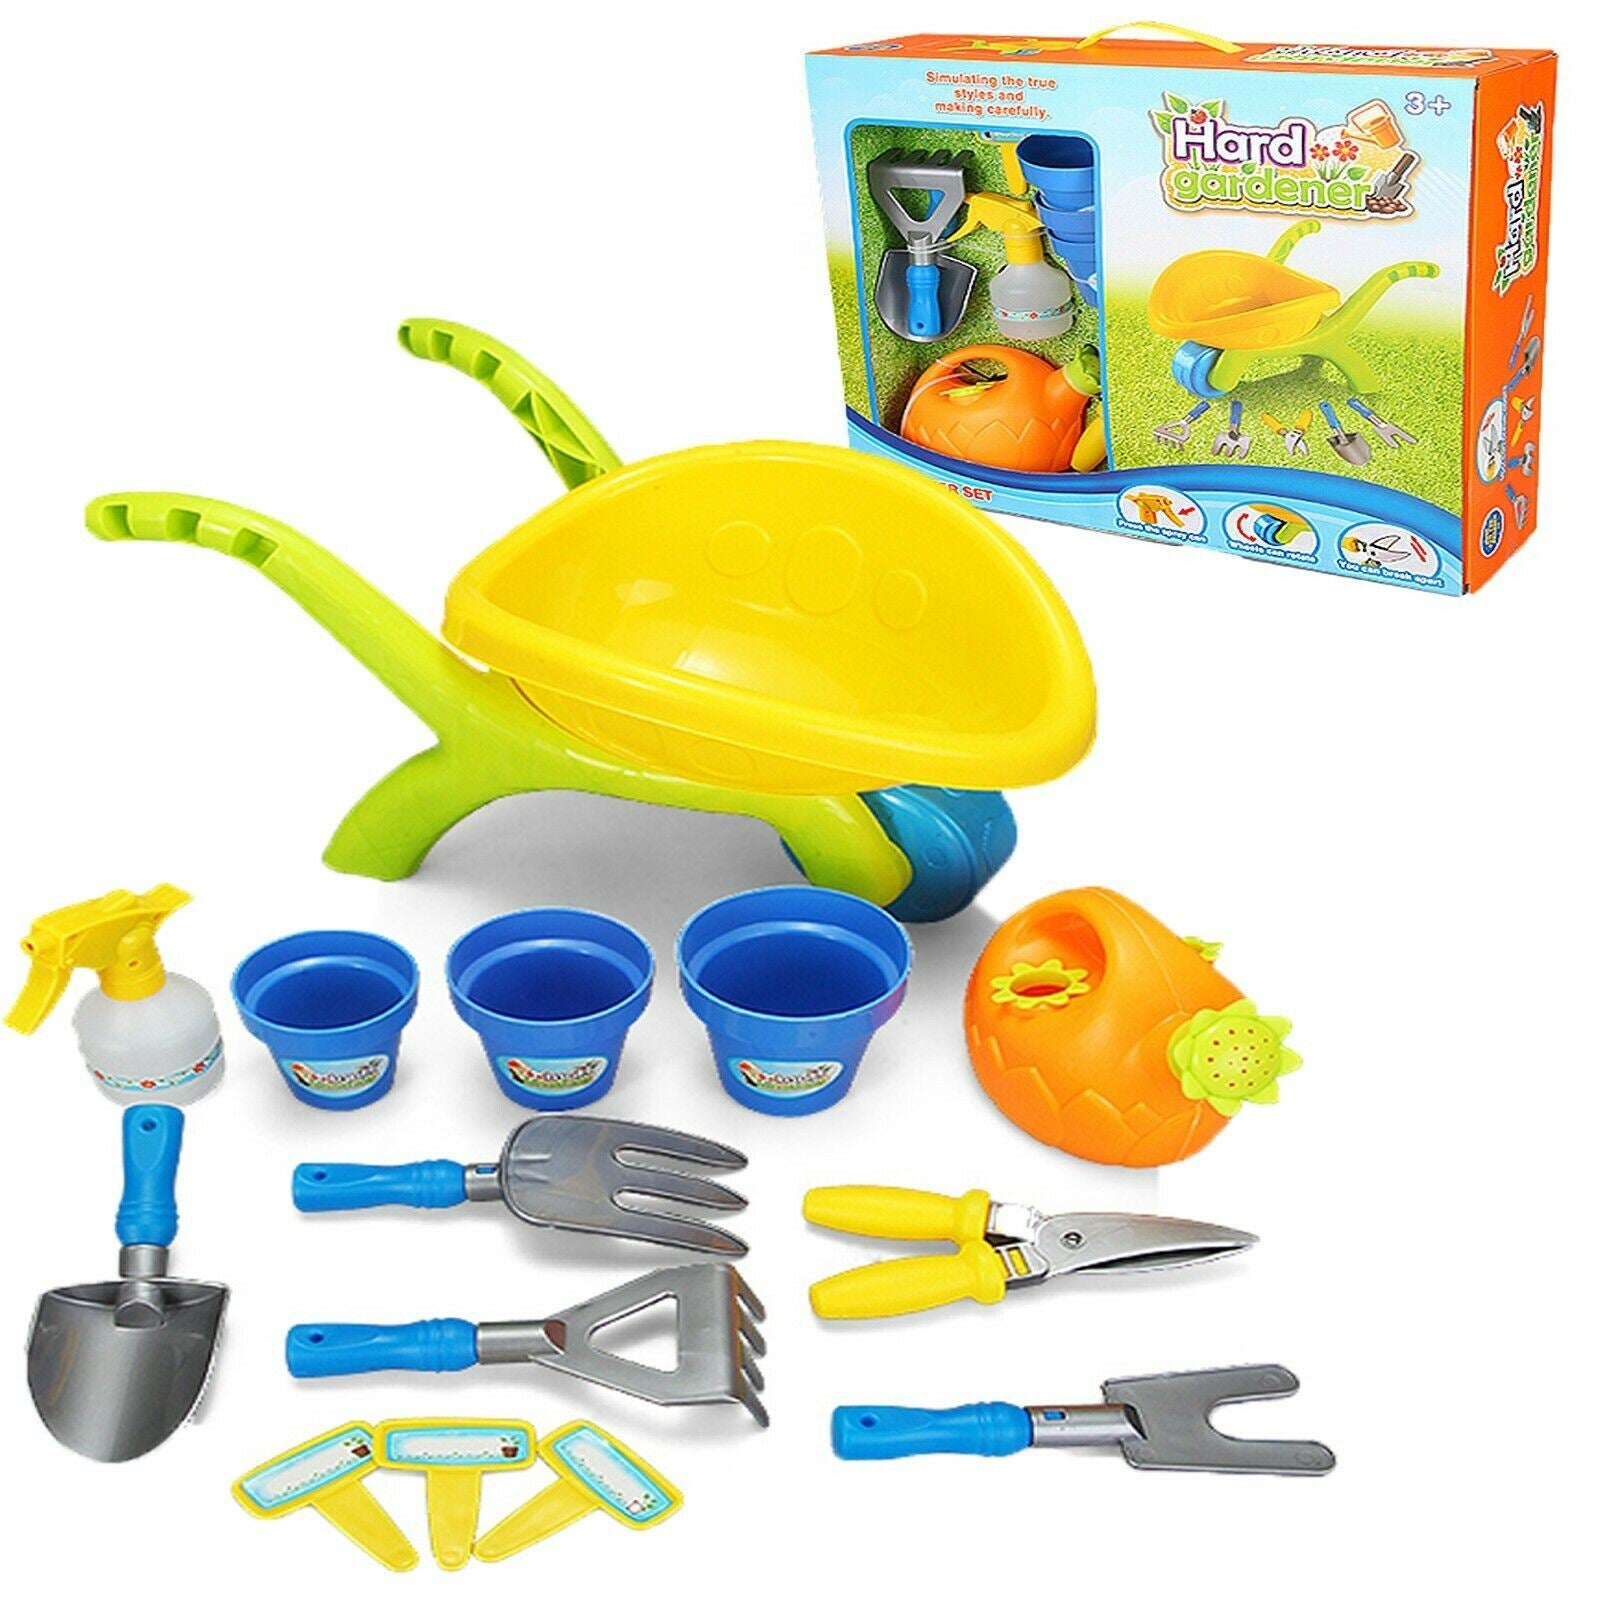 Kids Plastic Garden Wheelbarrow Playset by The Magic Toy Shop - The Magic Toy Shop